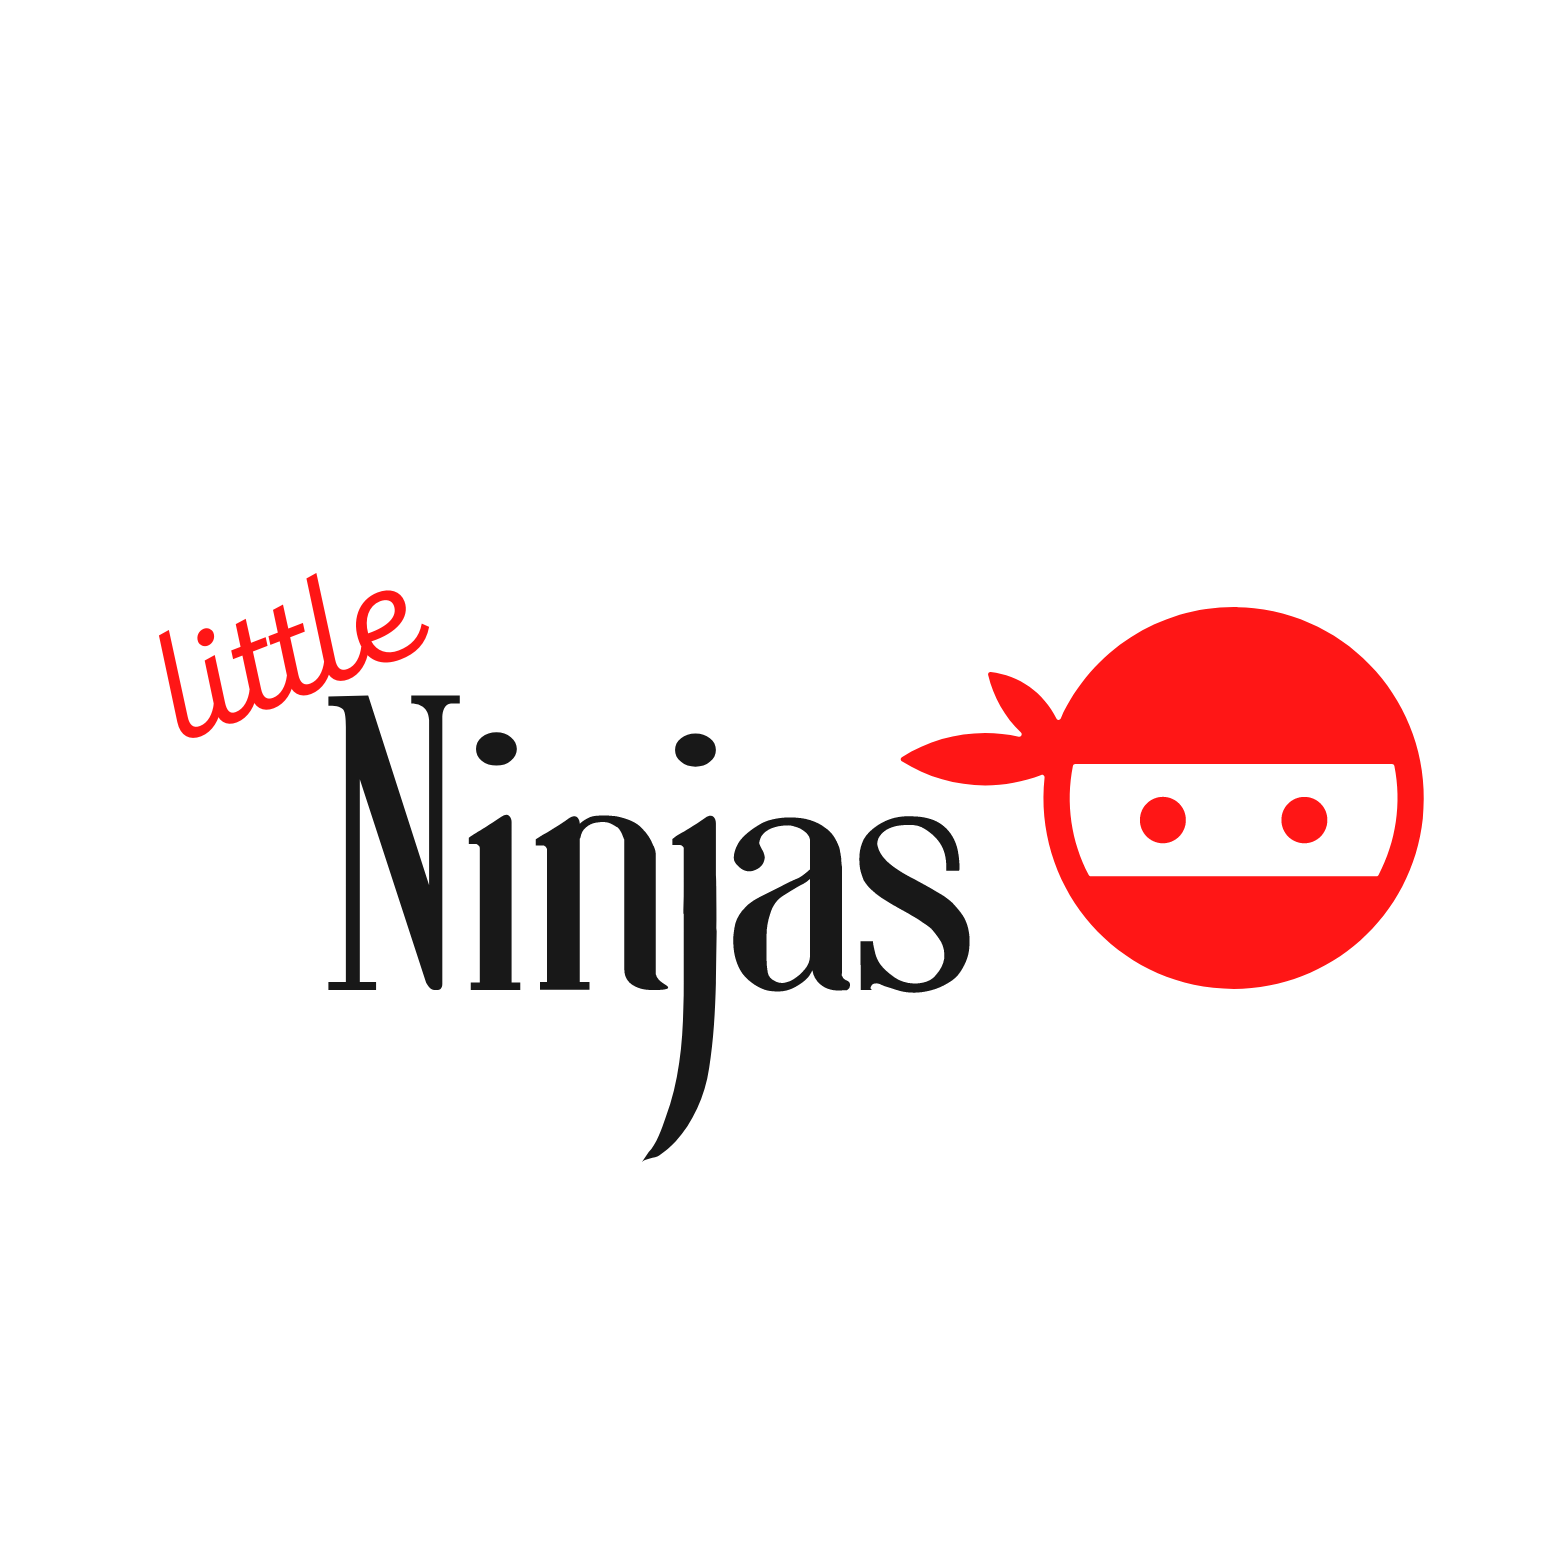 Little Ninjas on white.png